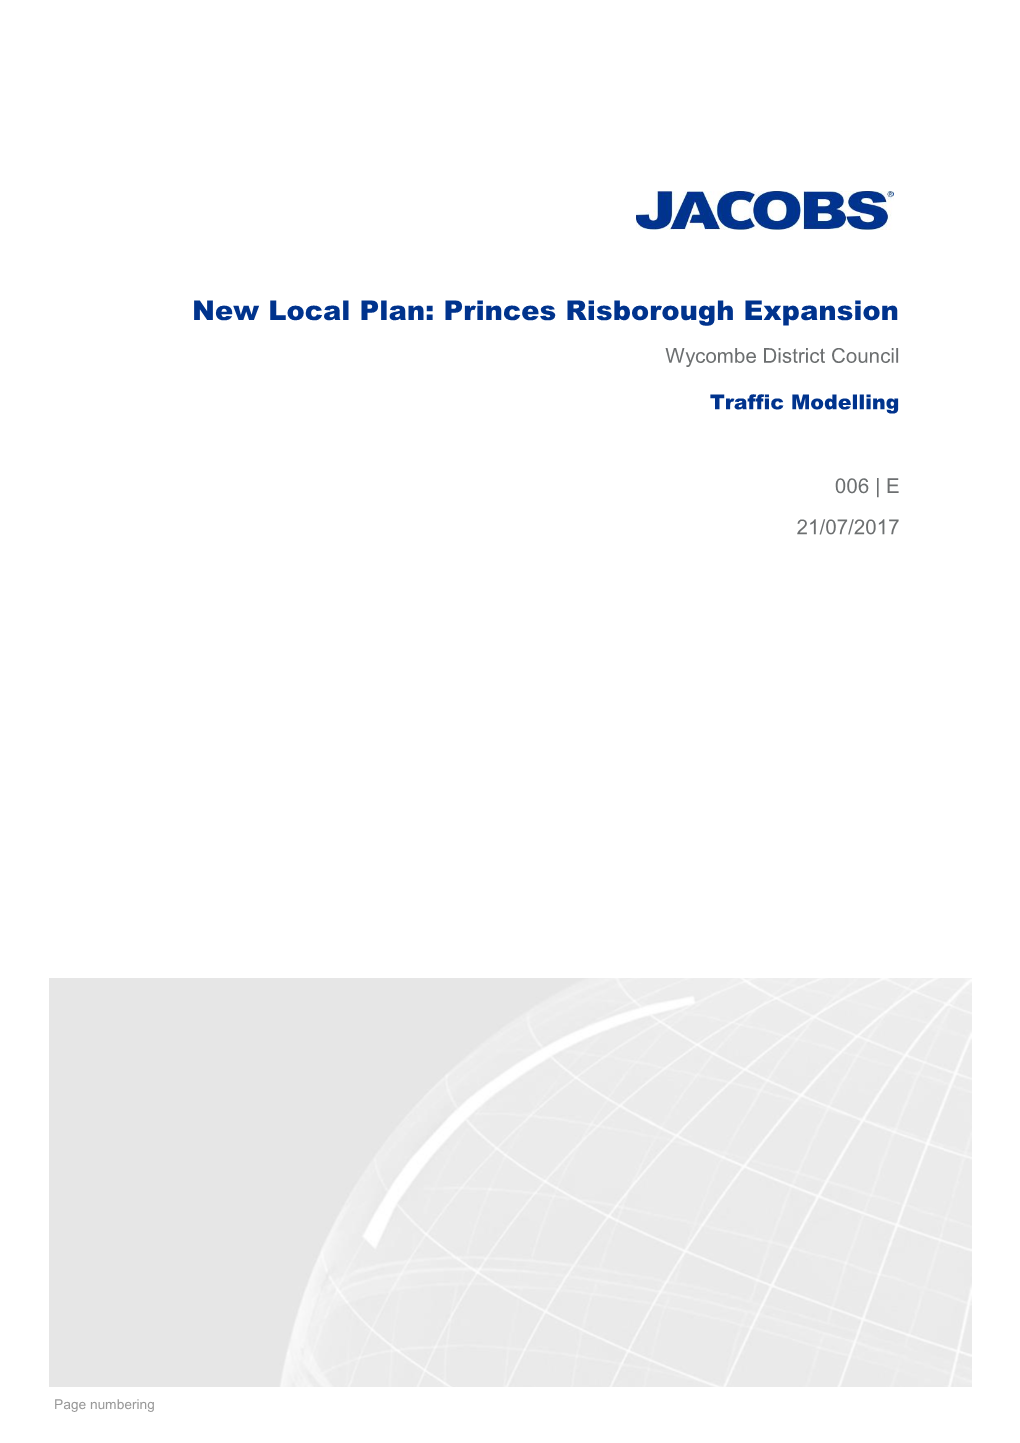 New Local Plan: Princes Risborough Expansion Traffic Modelling